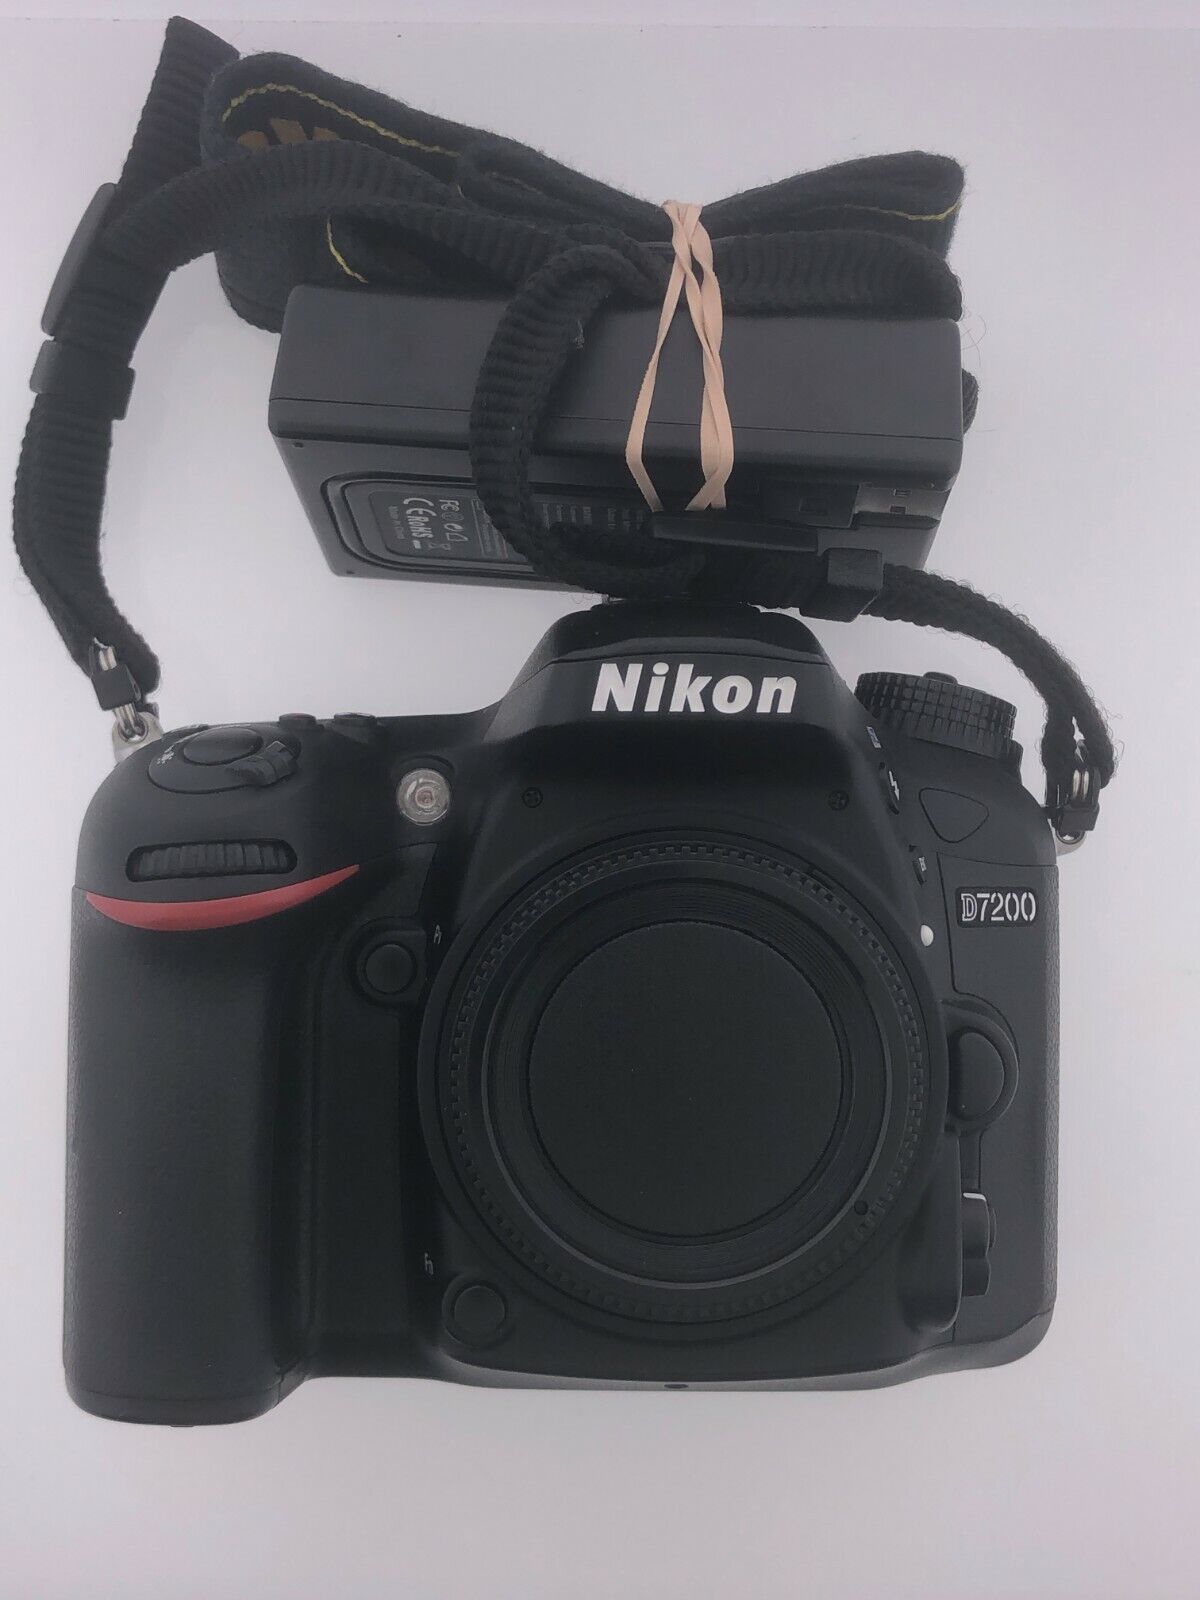 Excellent Nikon D7200 {24.2 mp} Digital SLR Camera Black Body Shutter 8361